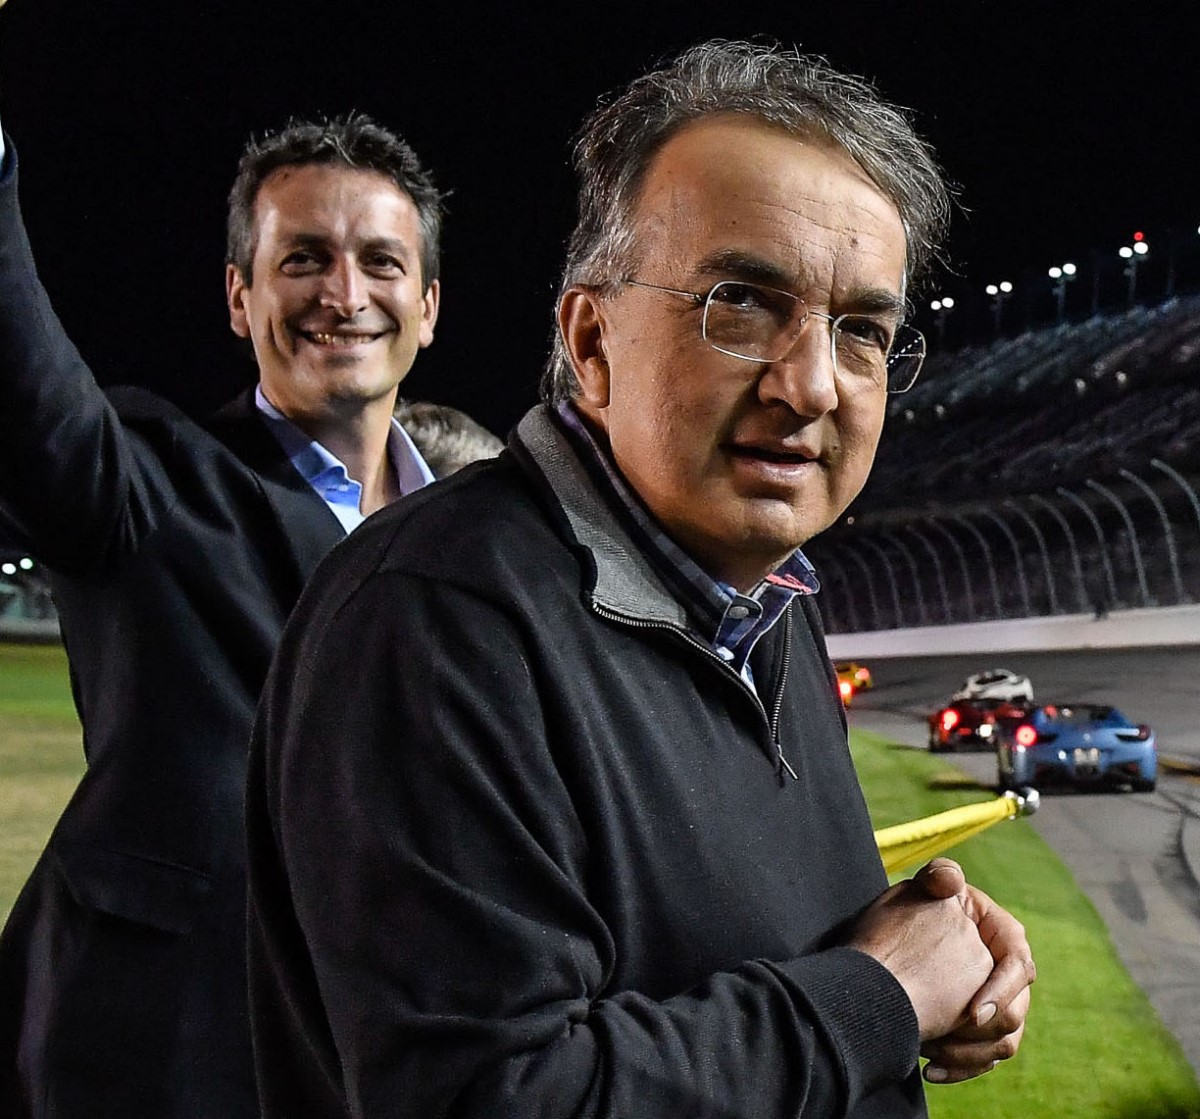 Fiat Chrysler CEO Sergio Marchionne has failed FCA and his Ferrari F1 team can't beat Mercedes